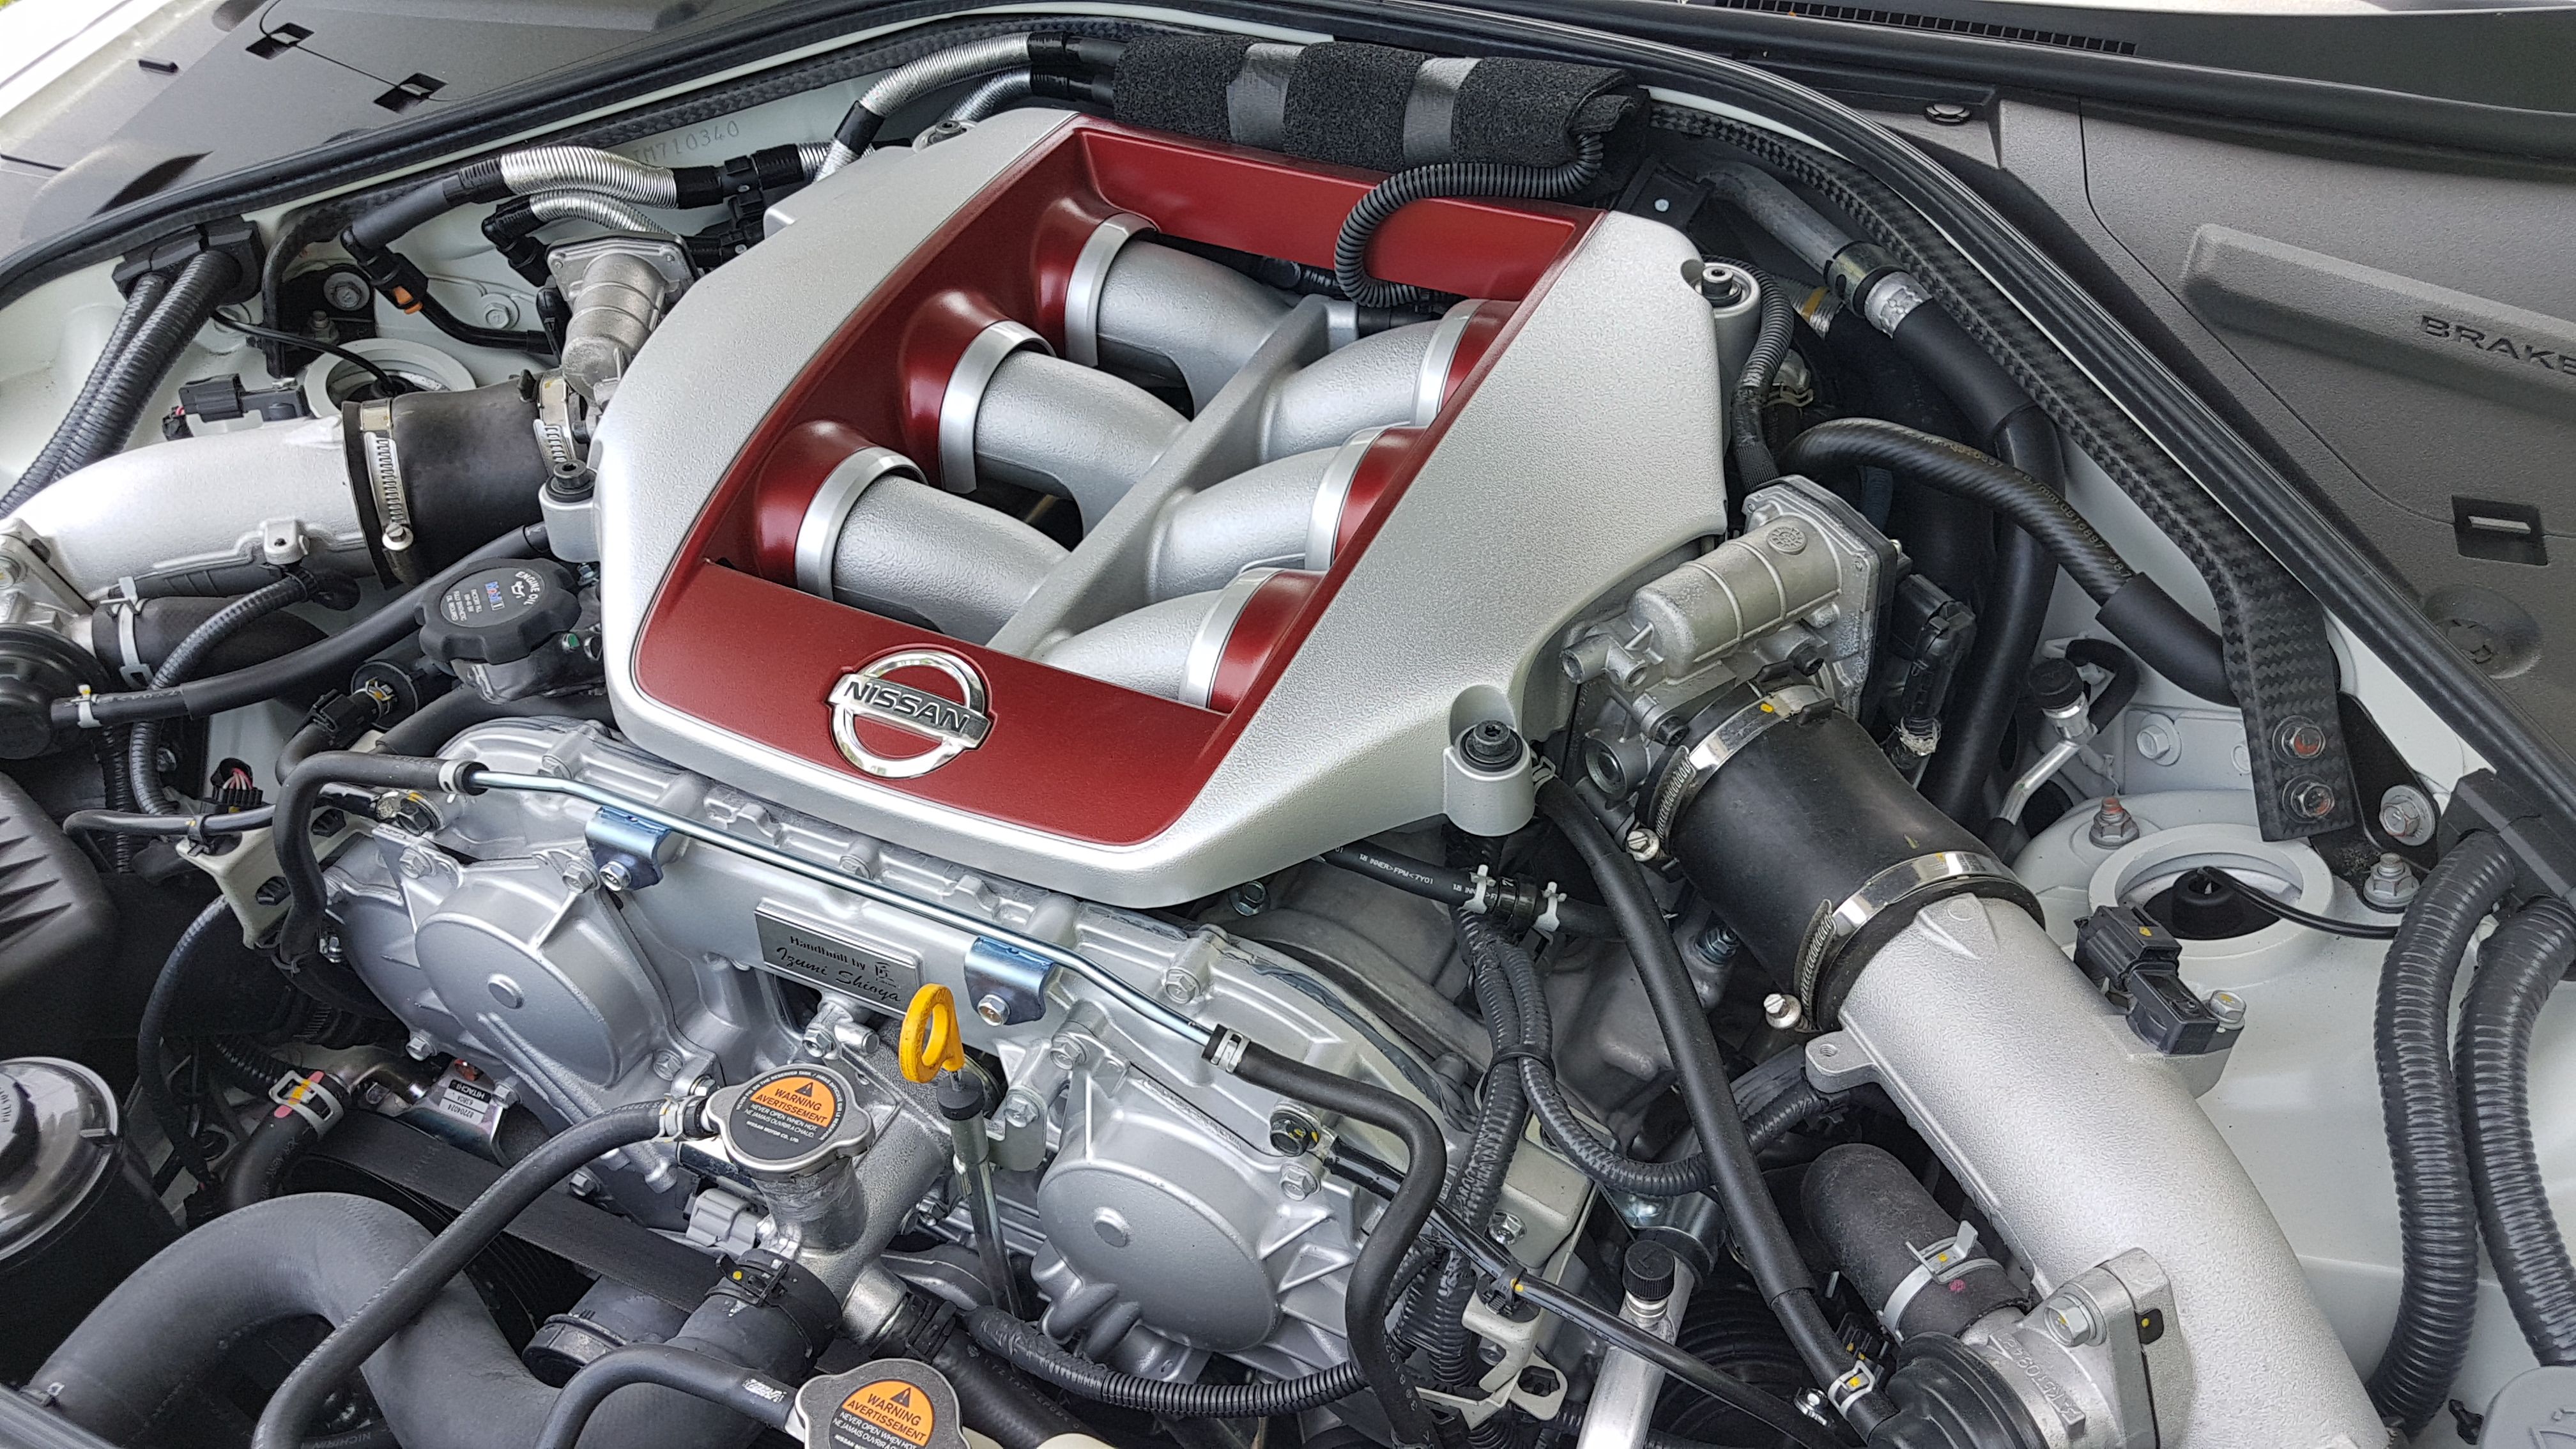 R35 Nissan GT-R's engine